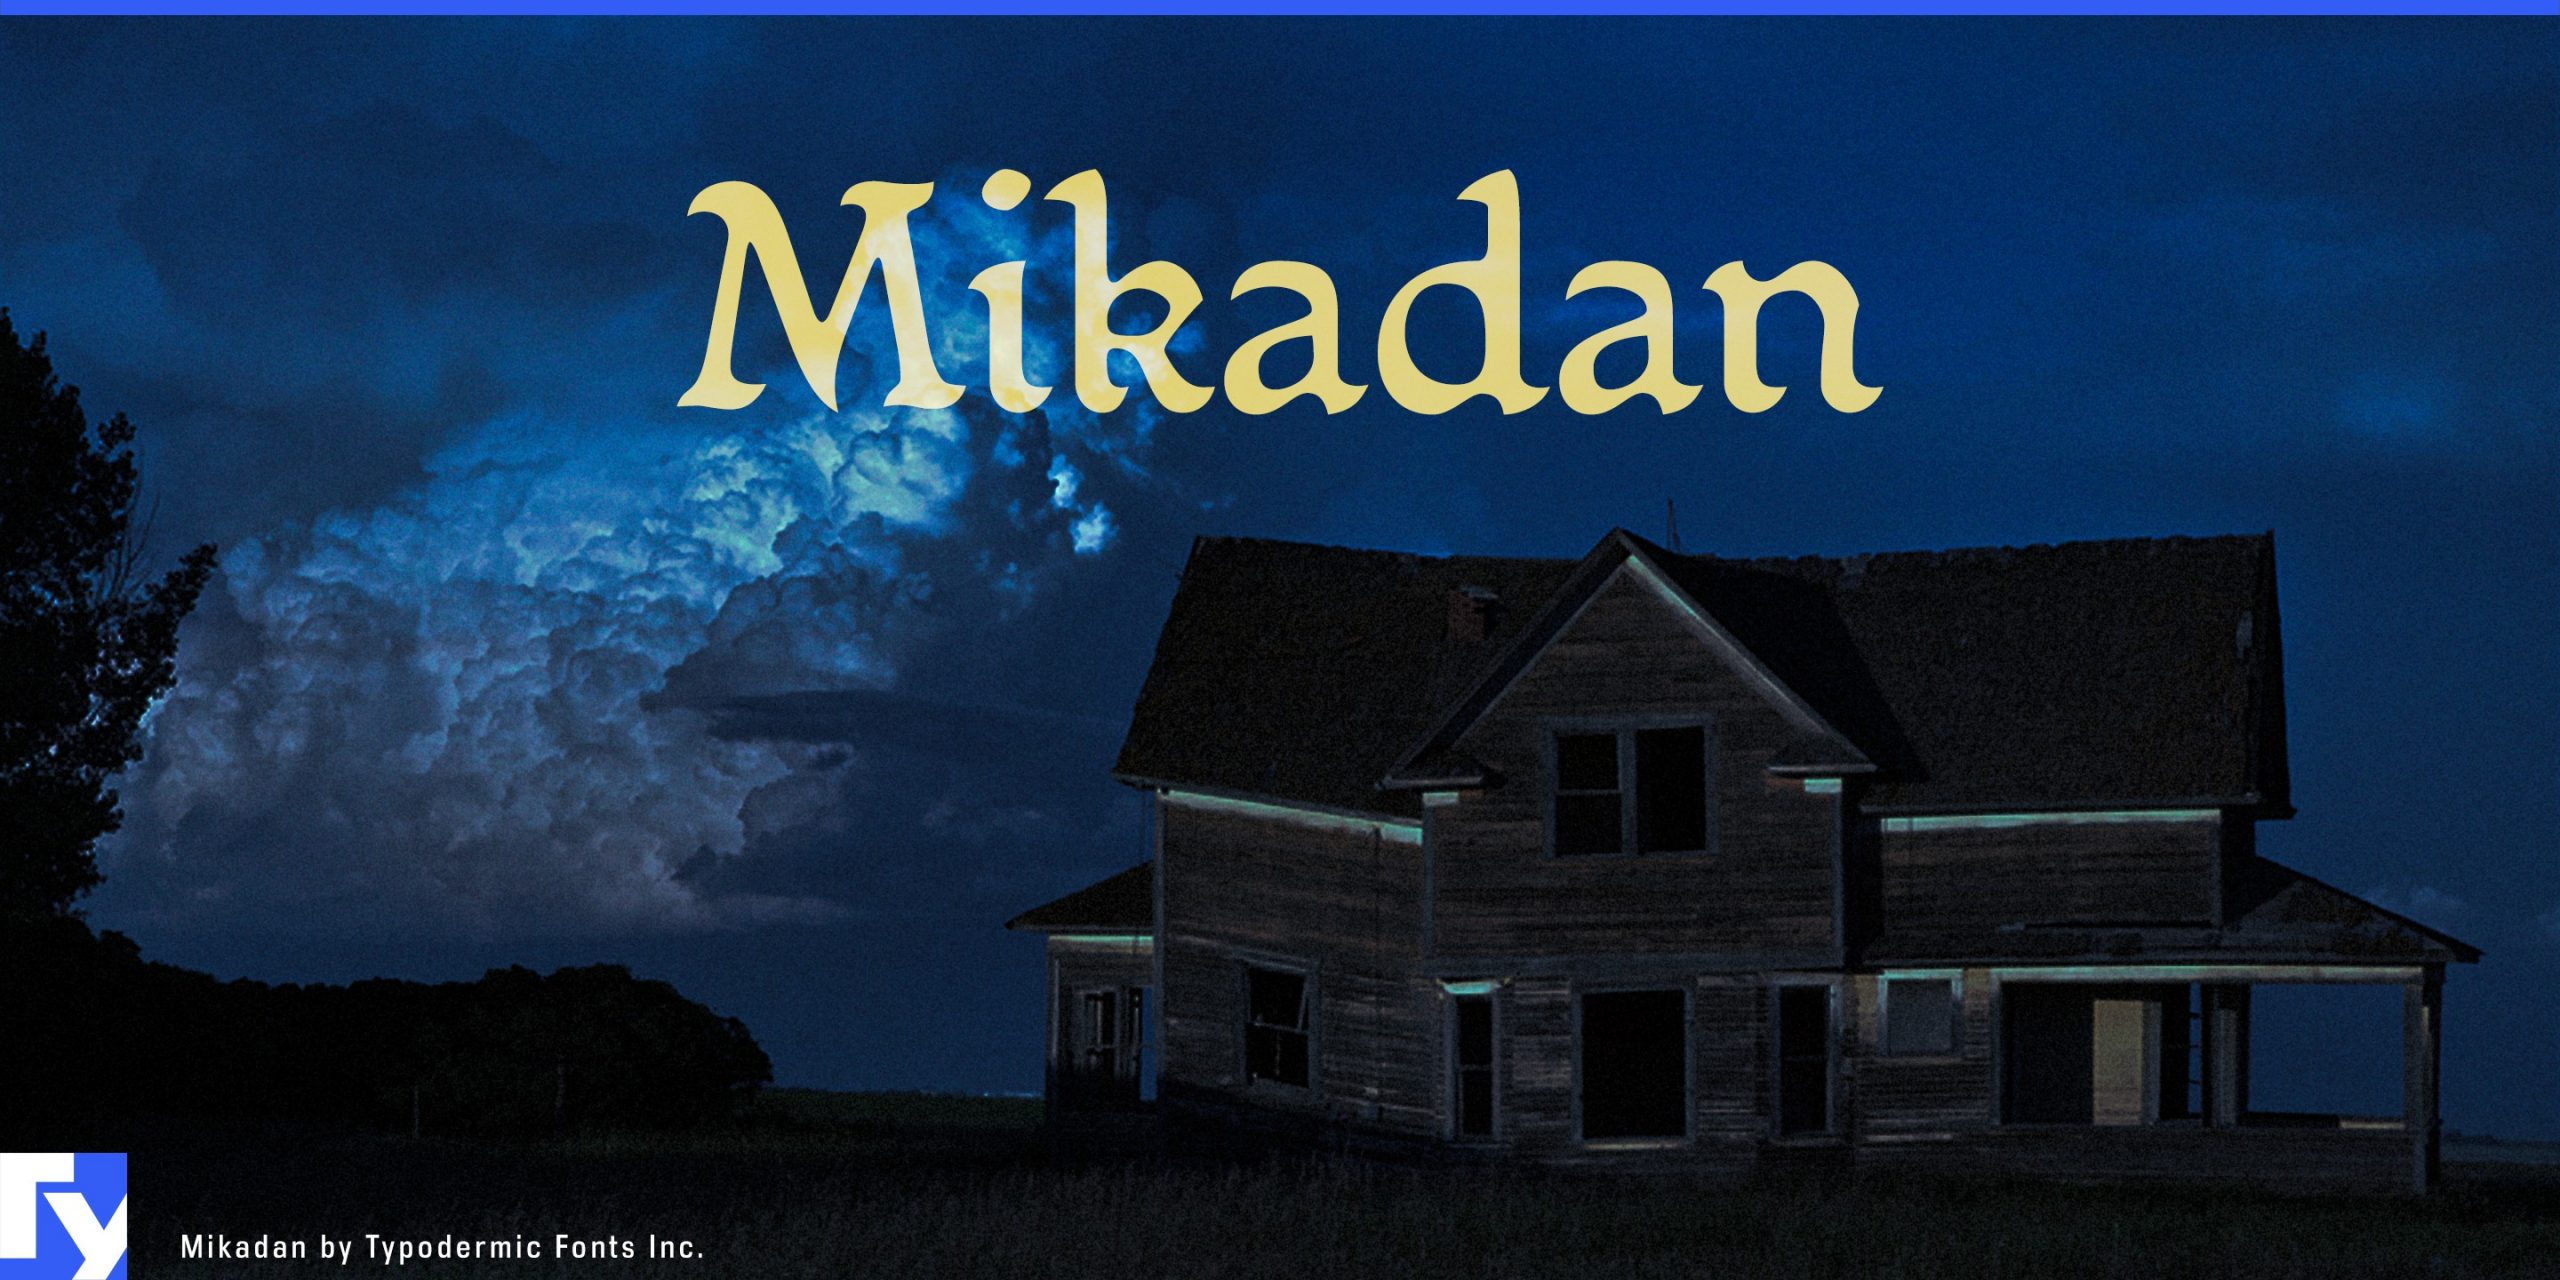 Mikadan: Where Medieval Fantasy Meets Modern Design